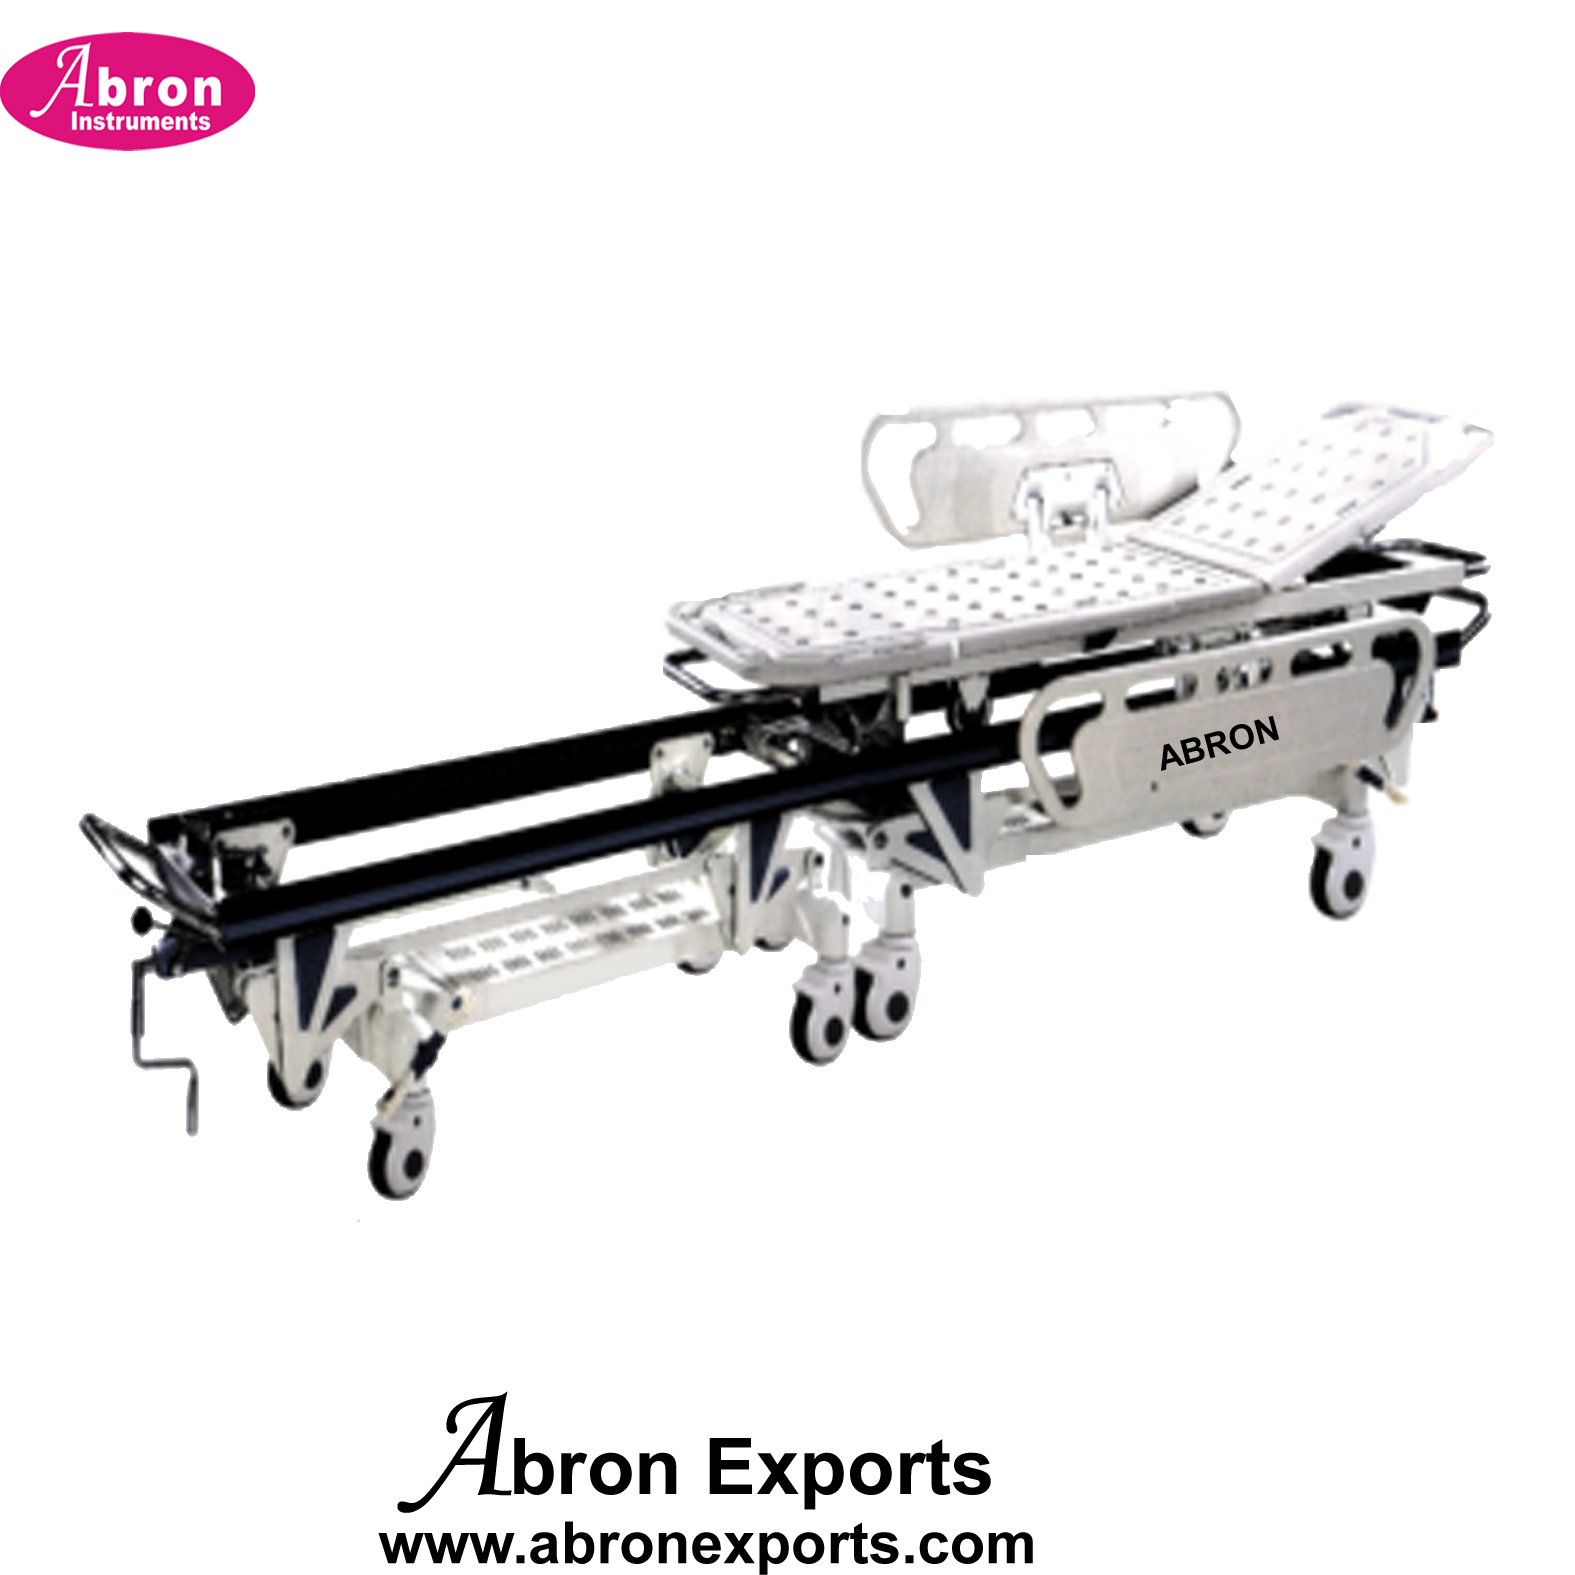 Stretcher Patient Connection Luxurious Furniture Hospital Medical E4 Abron ABM-2261STL 